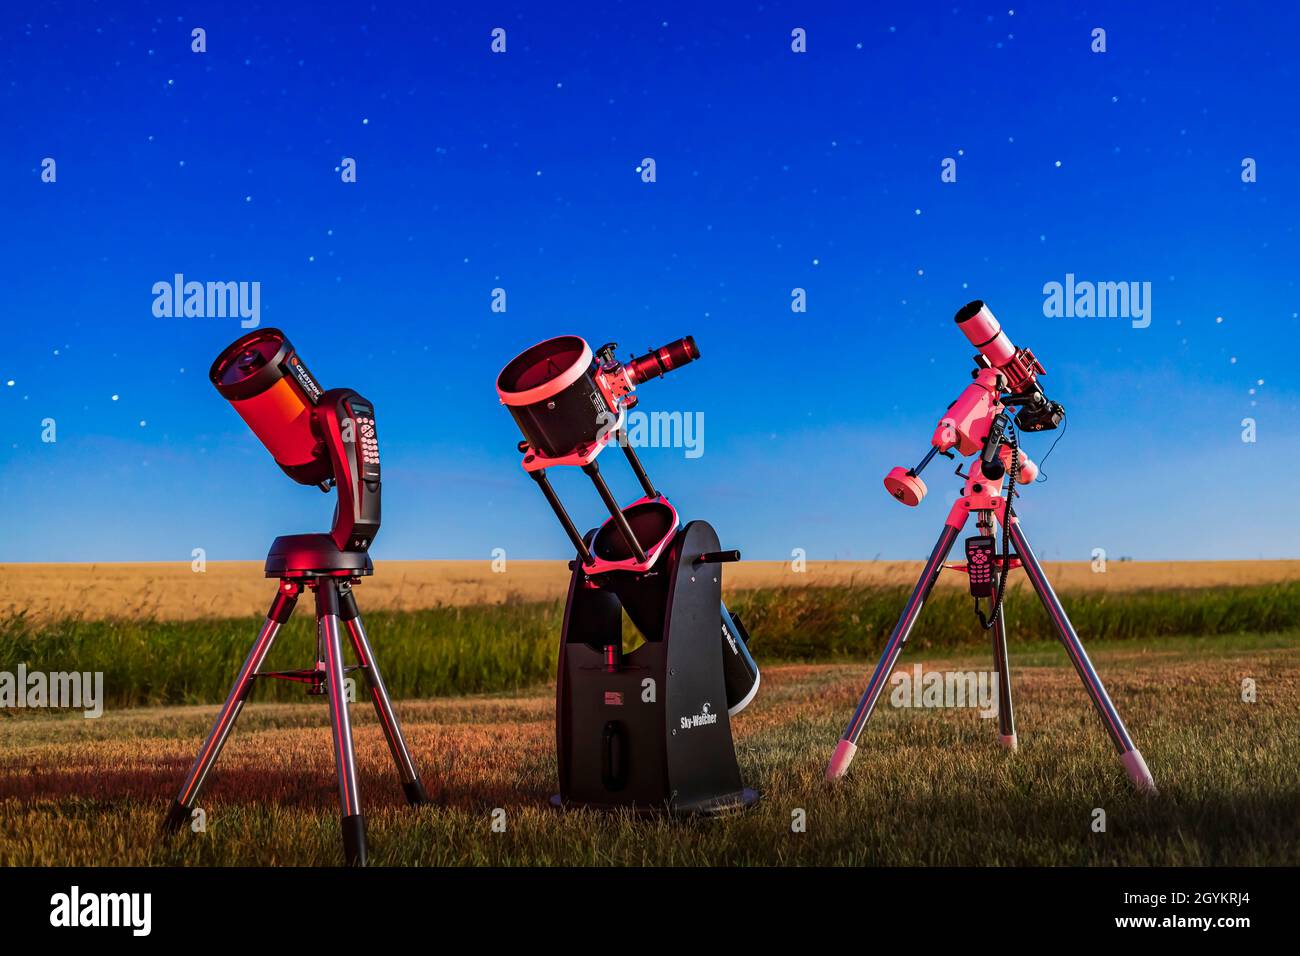 A trio of telescope types in moonlight: The Celestron NexStar 6SE Schmidt-Cassegrain, the Sky-Watcher 8-inch Flextube Dobsonian, and the SharpStar 76m Stock Photo